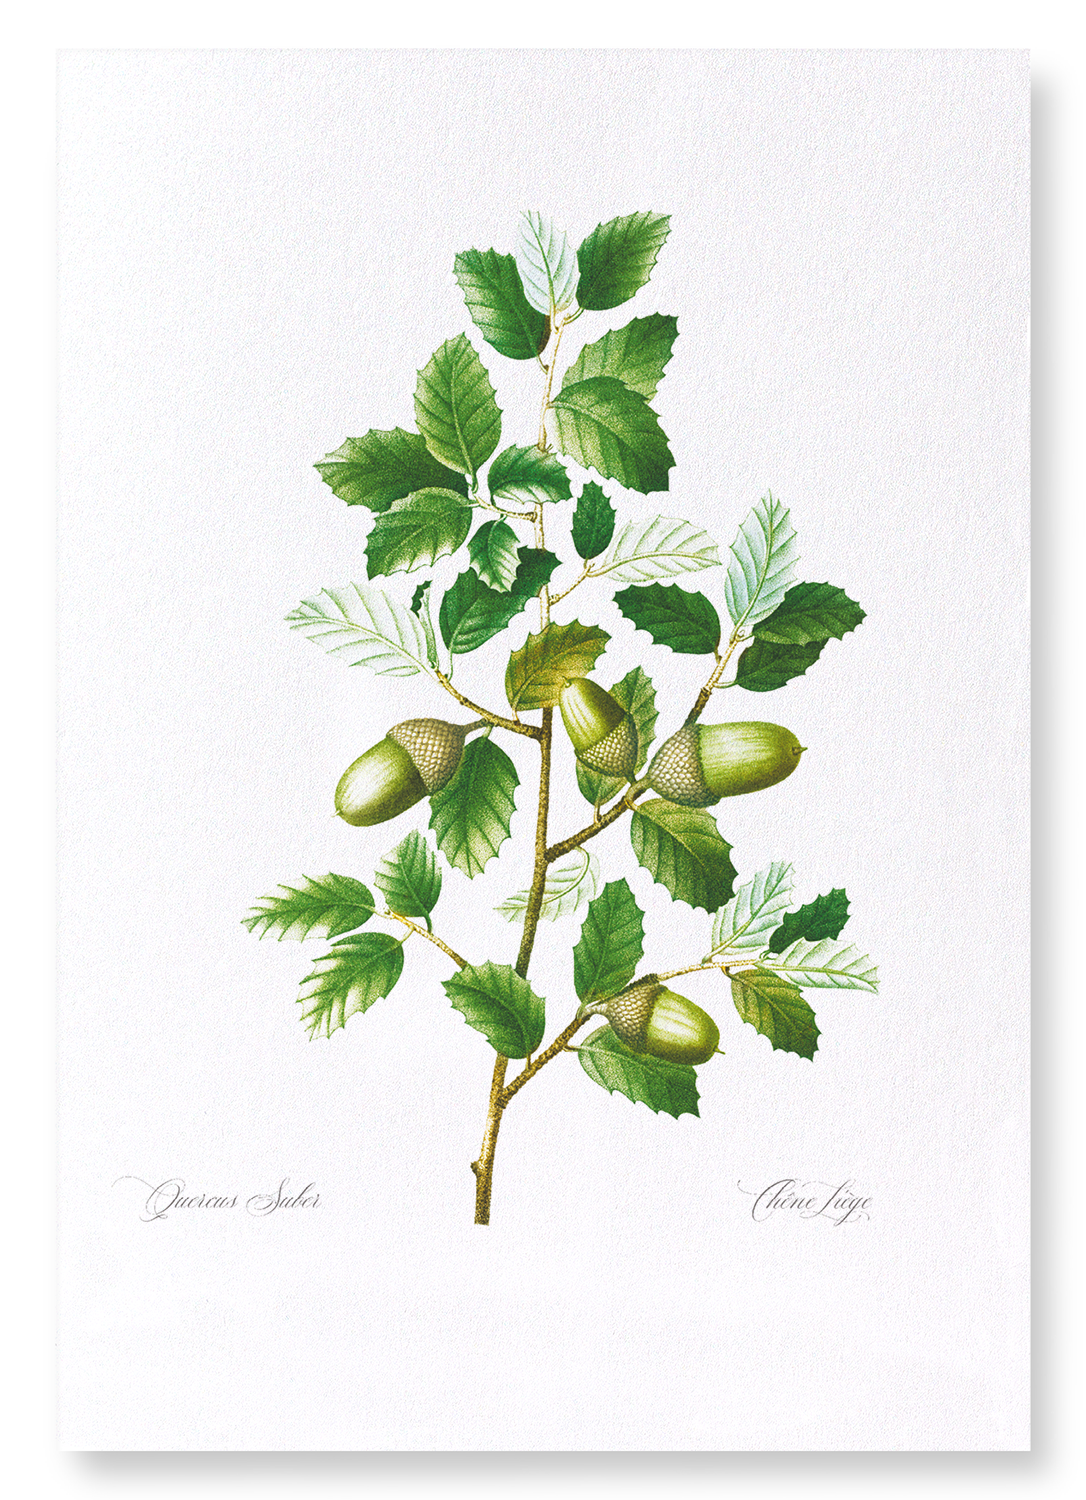 CORK OAK TREE ACORNS: Botanical Art Print